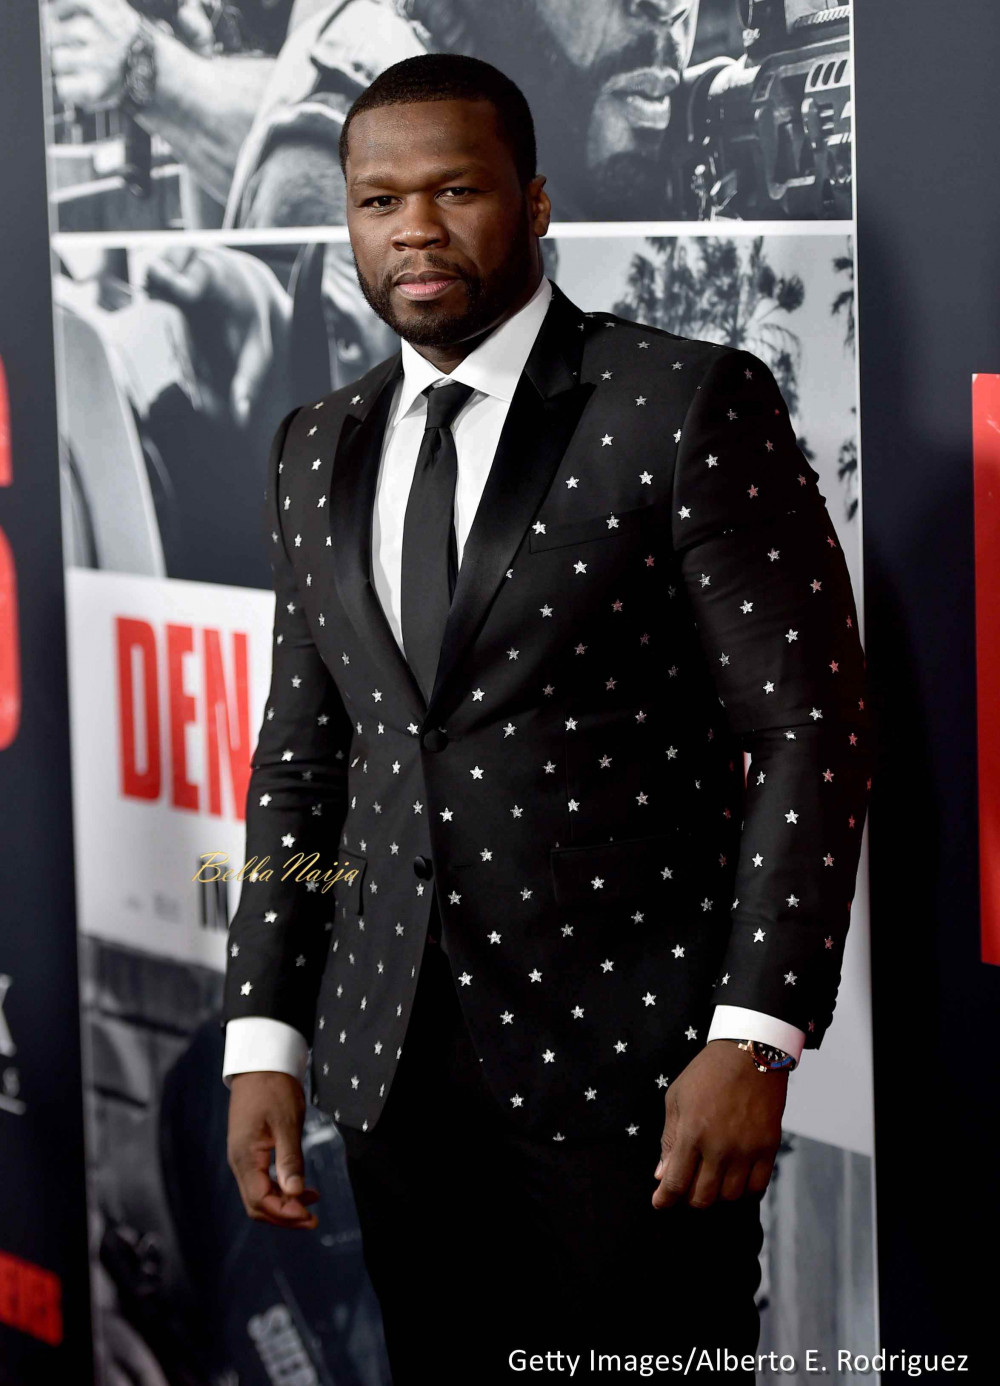 50 Cent "accidentally" makes Millions off "Animal Ambition" album through Bitcoins